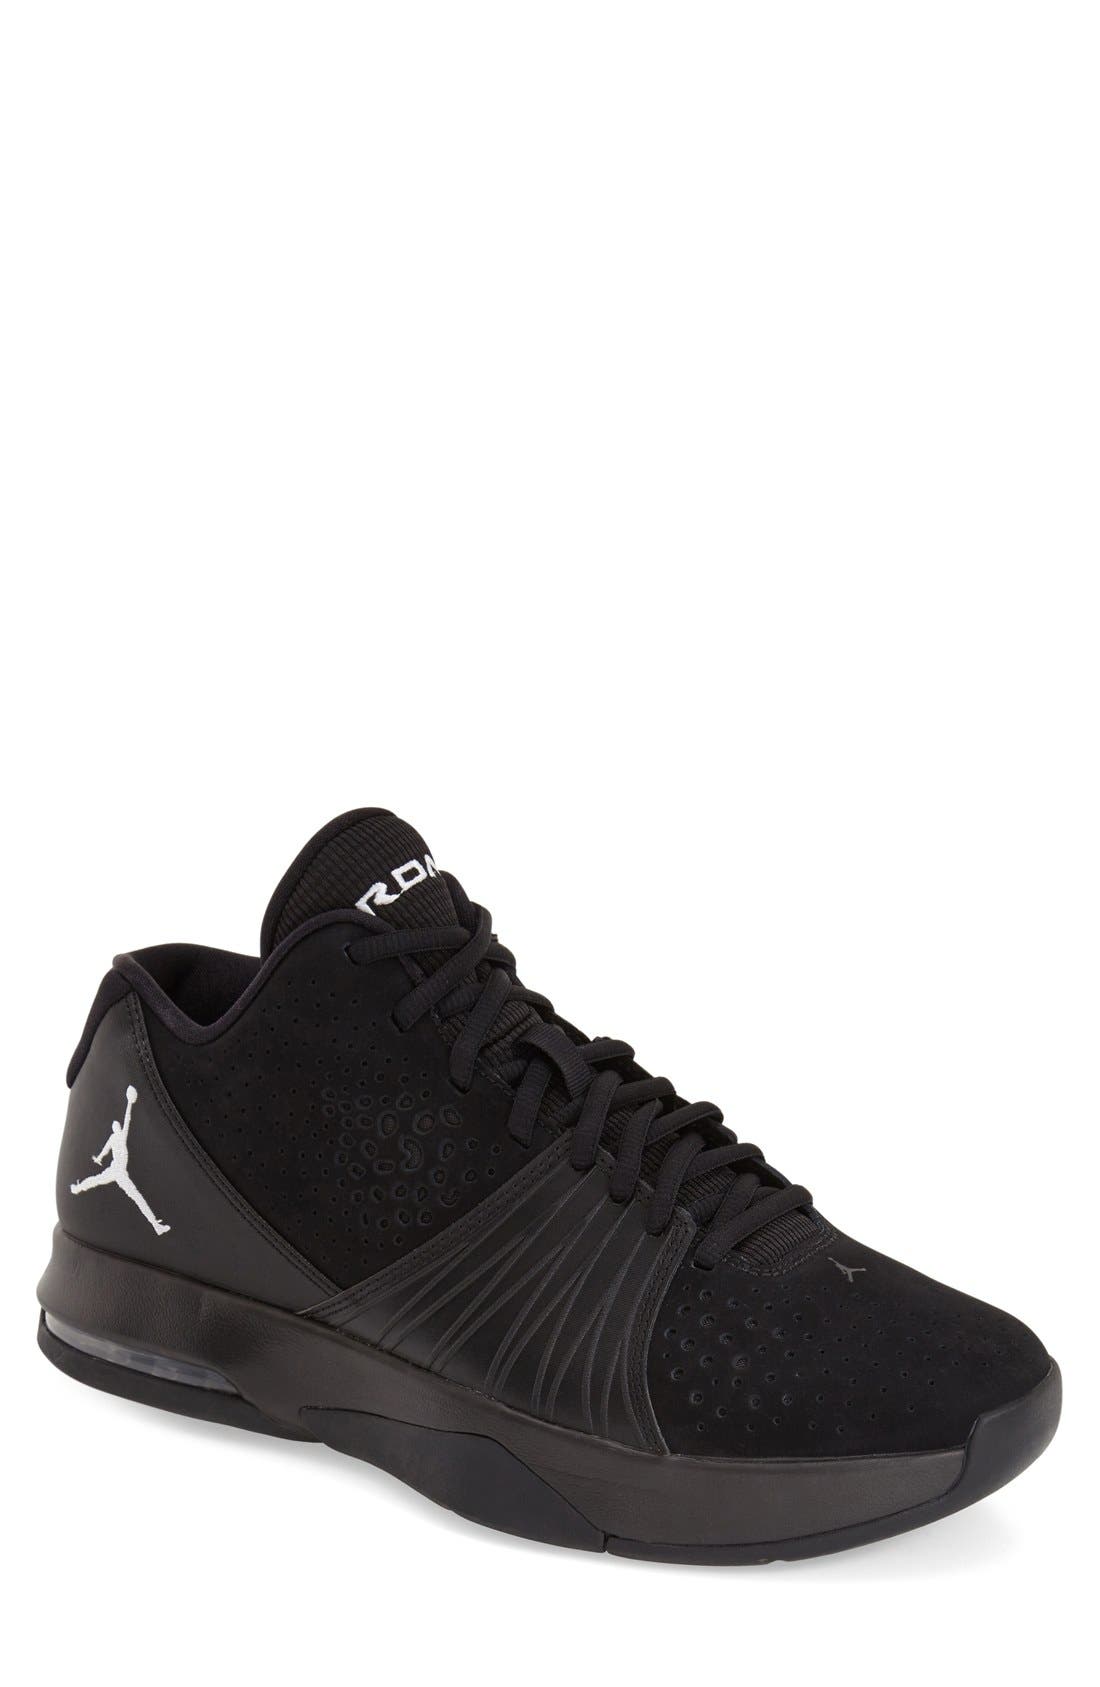 Nike 'Air Jordan 5AM' Training Shoe 